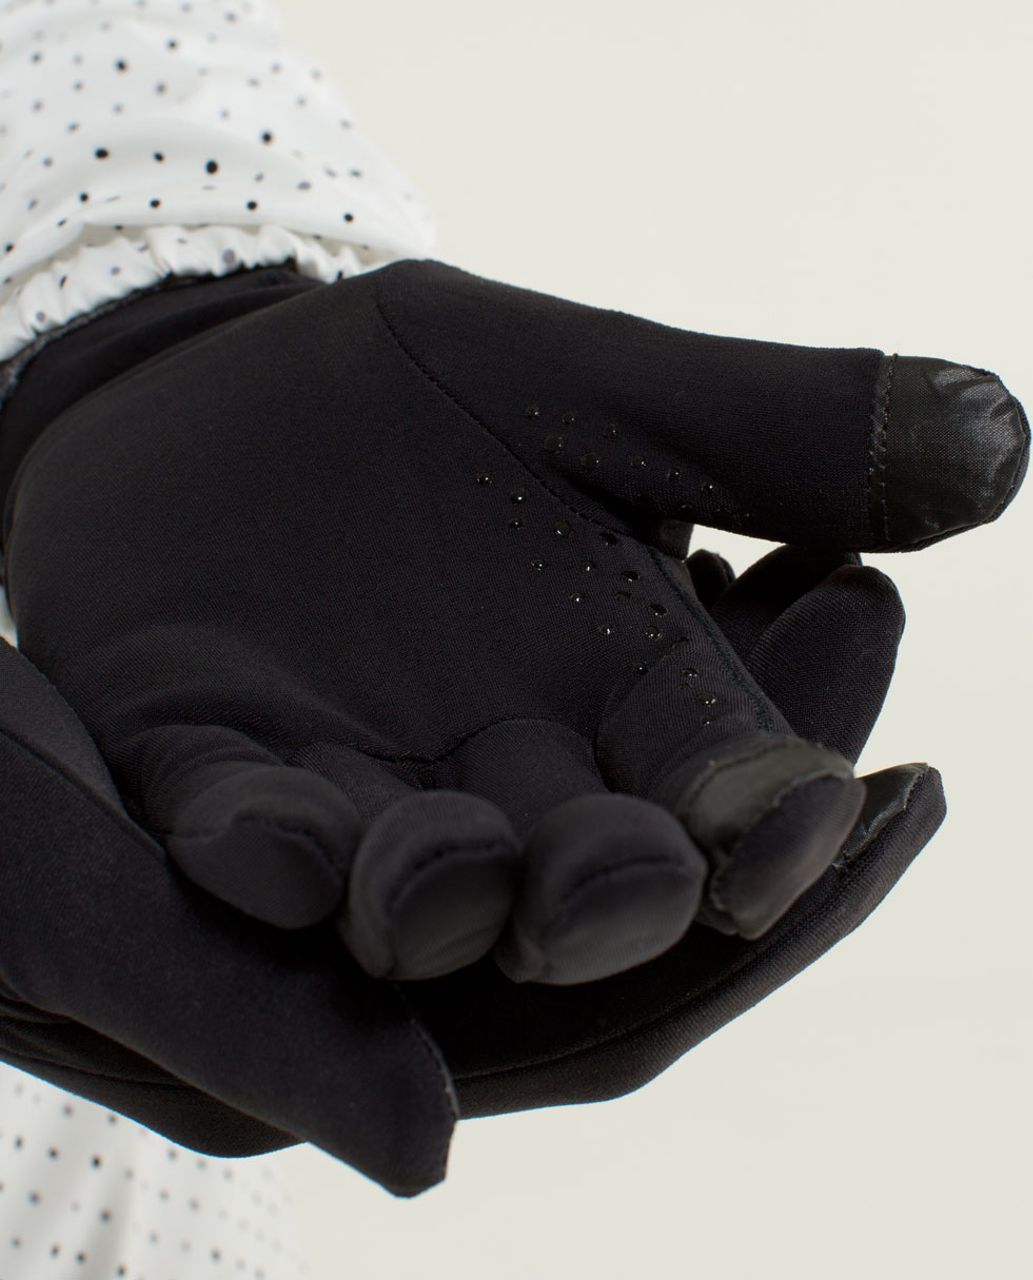 Lululemon Frosty Run Gloves - Black (First Release)